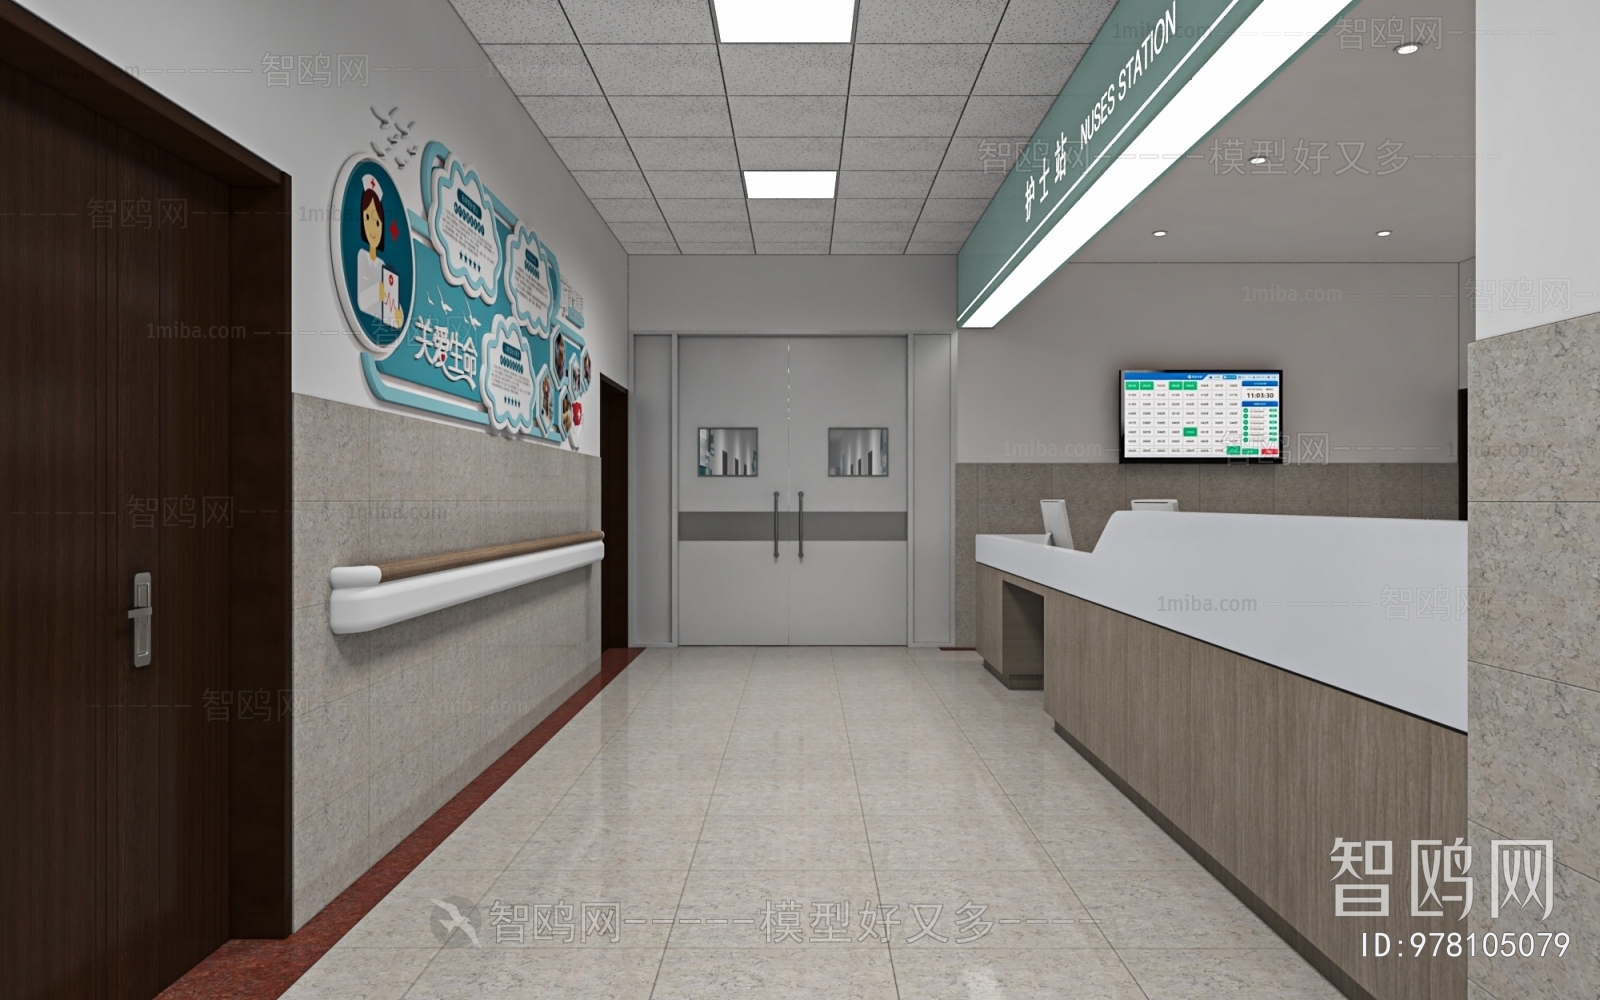 Modern Nurse Station